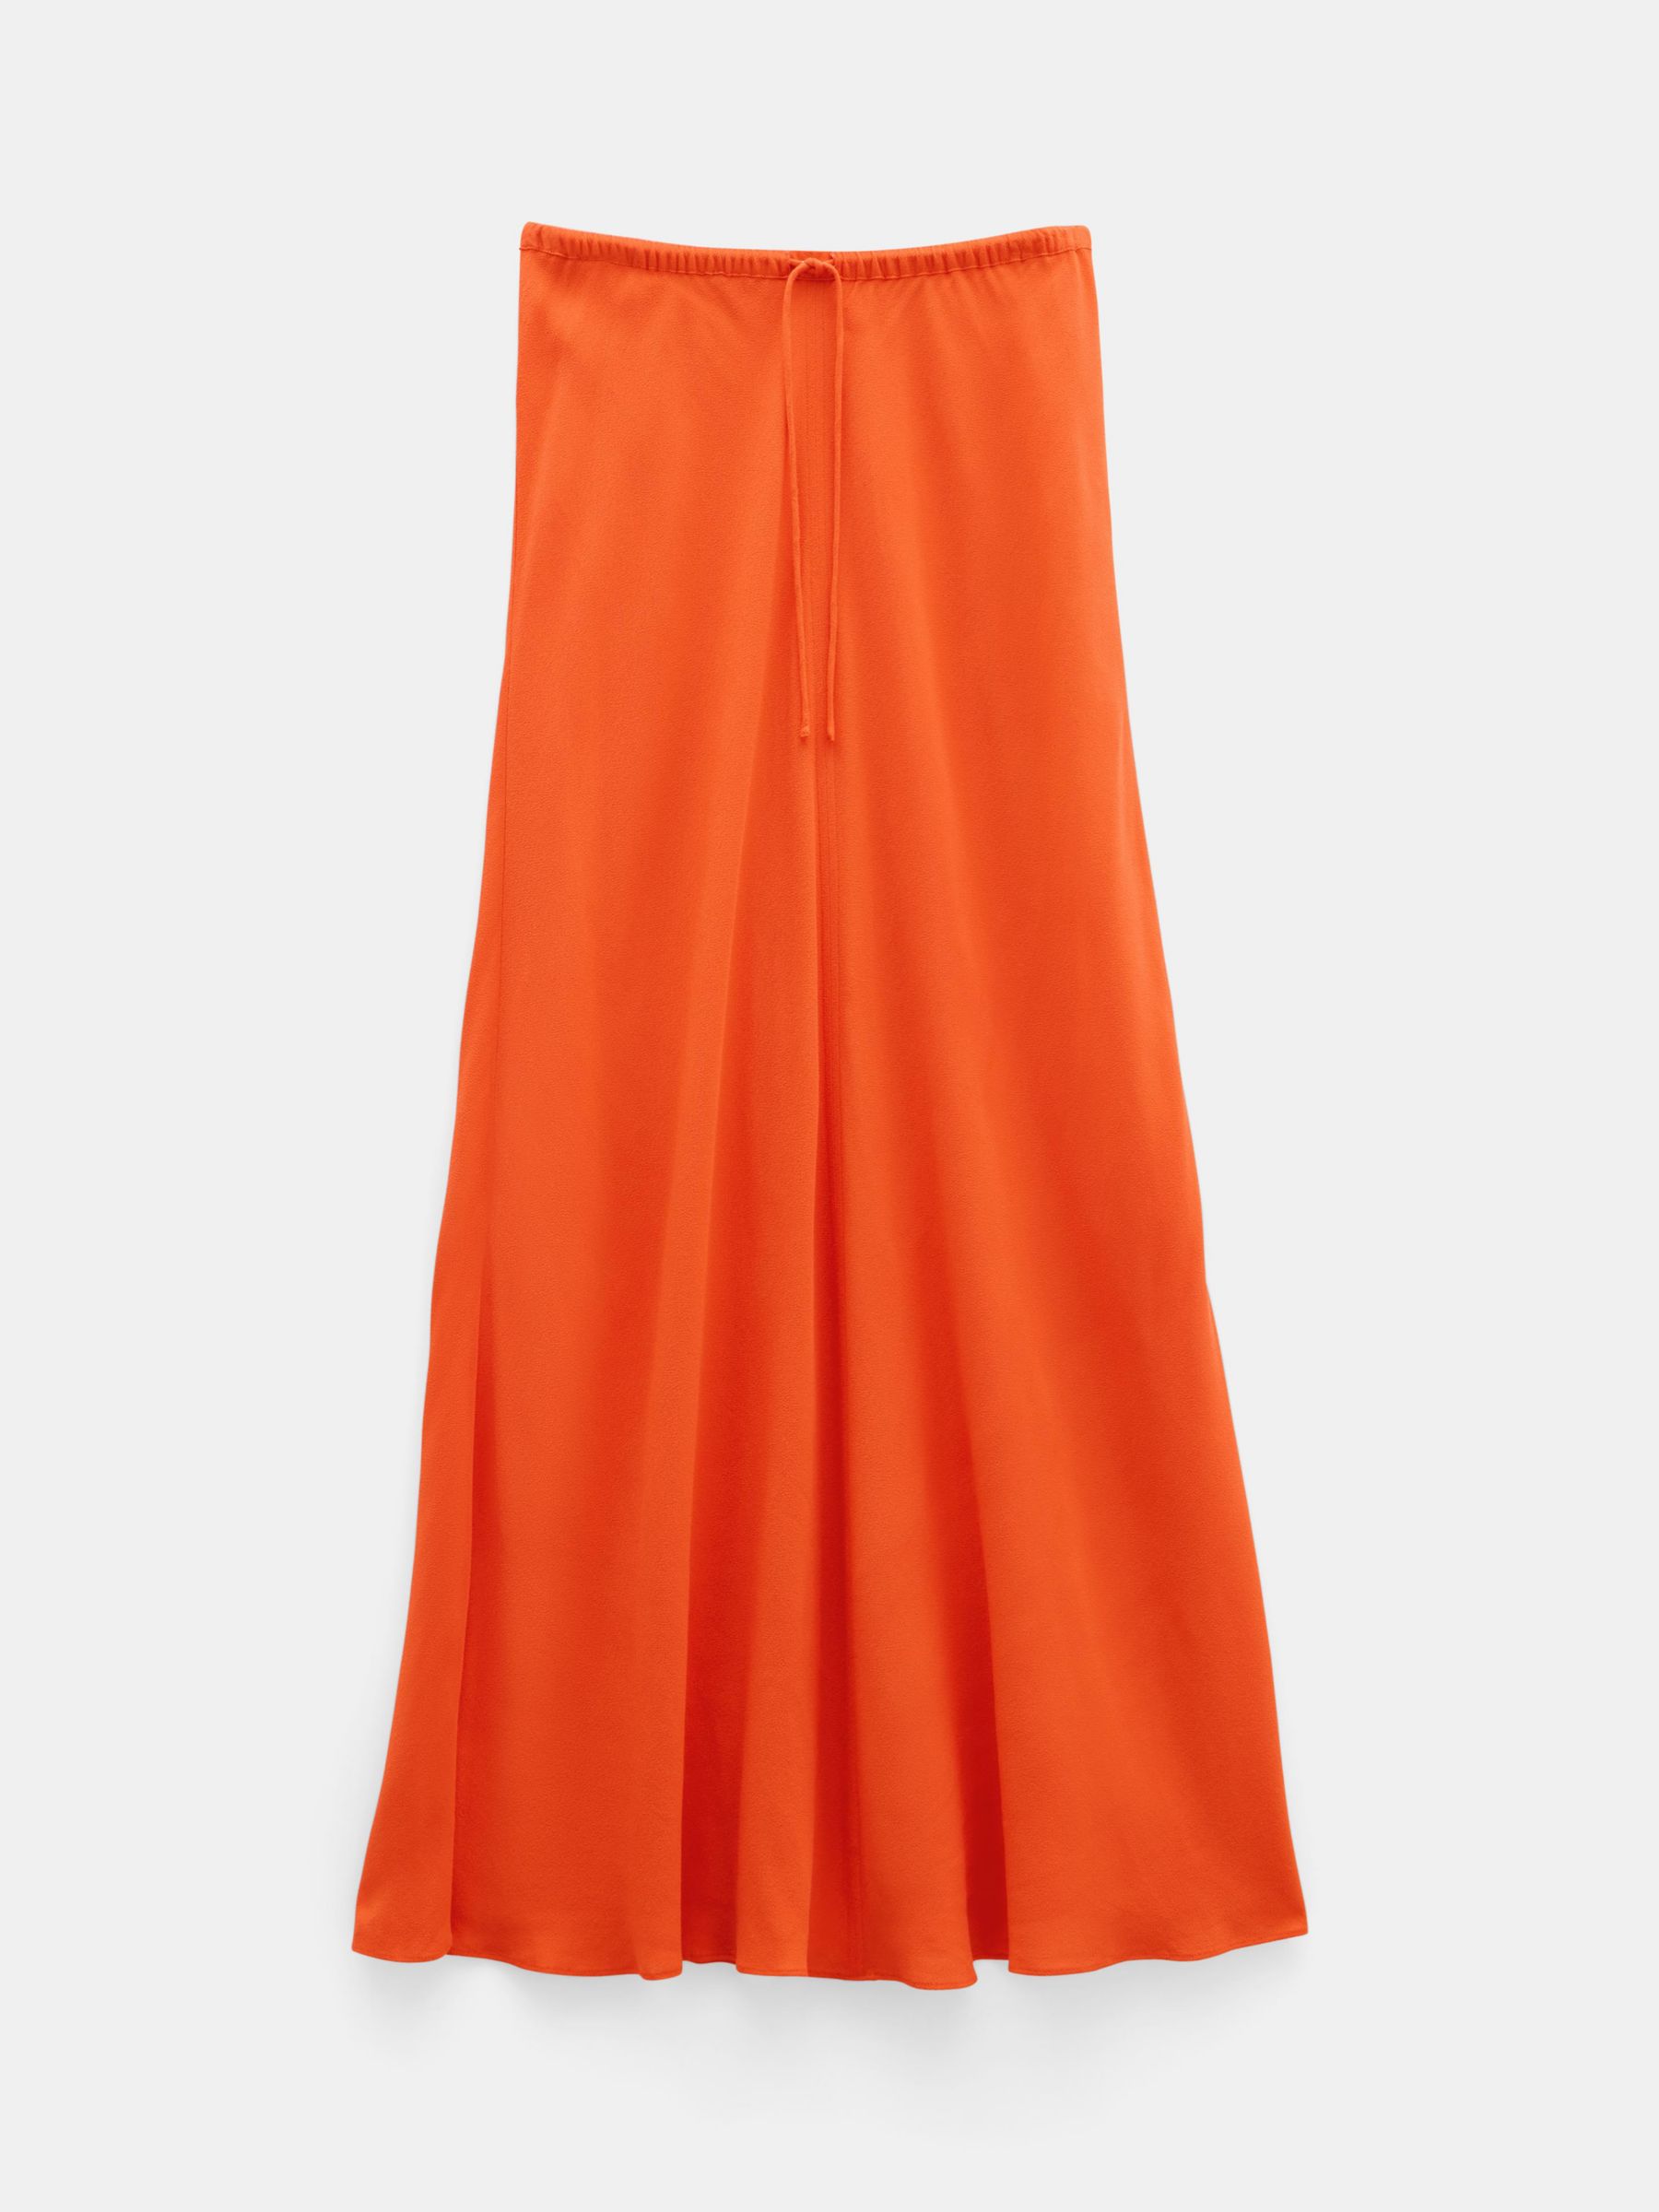 Buy HUSH Hanna Maxi Skirt, Orange Red Online at johnlewis.com